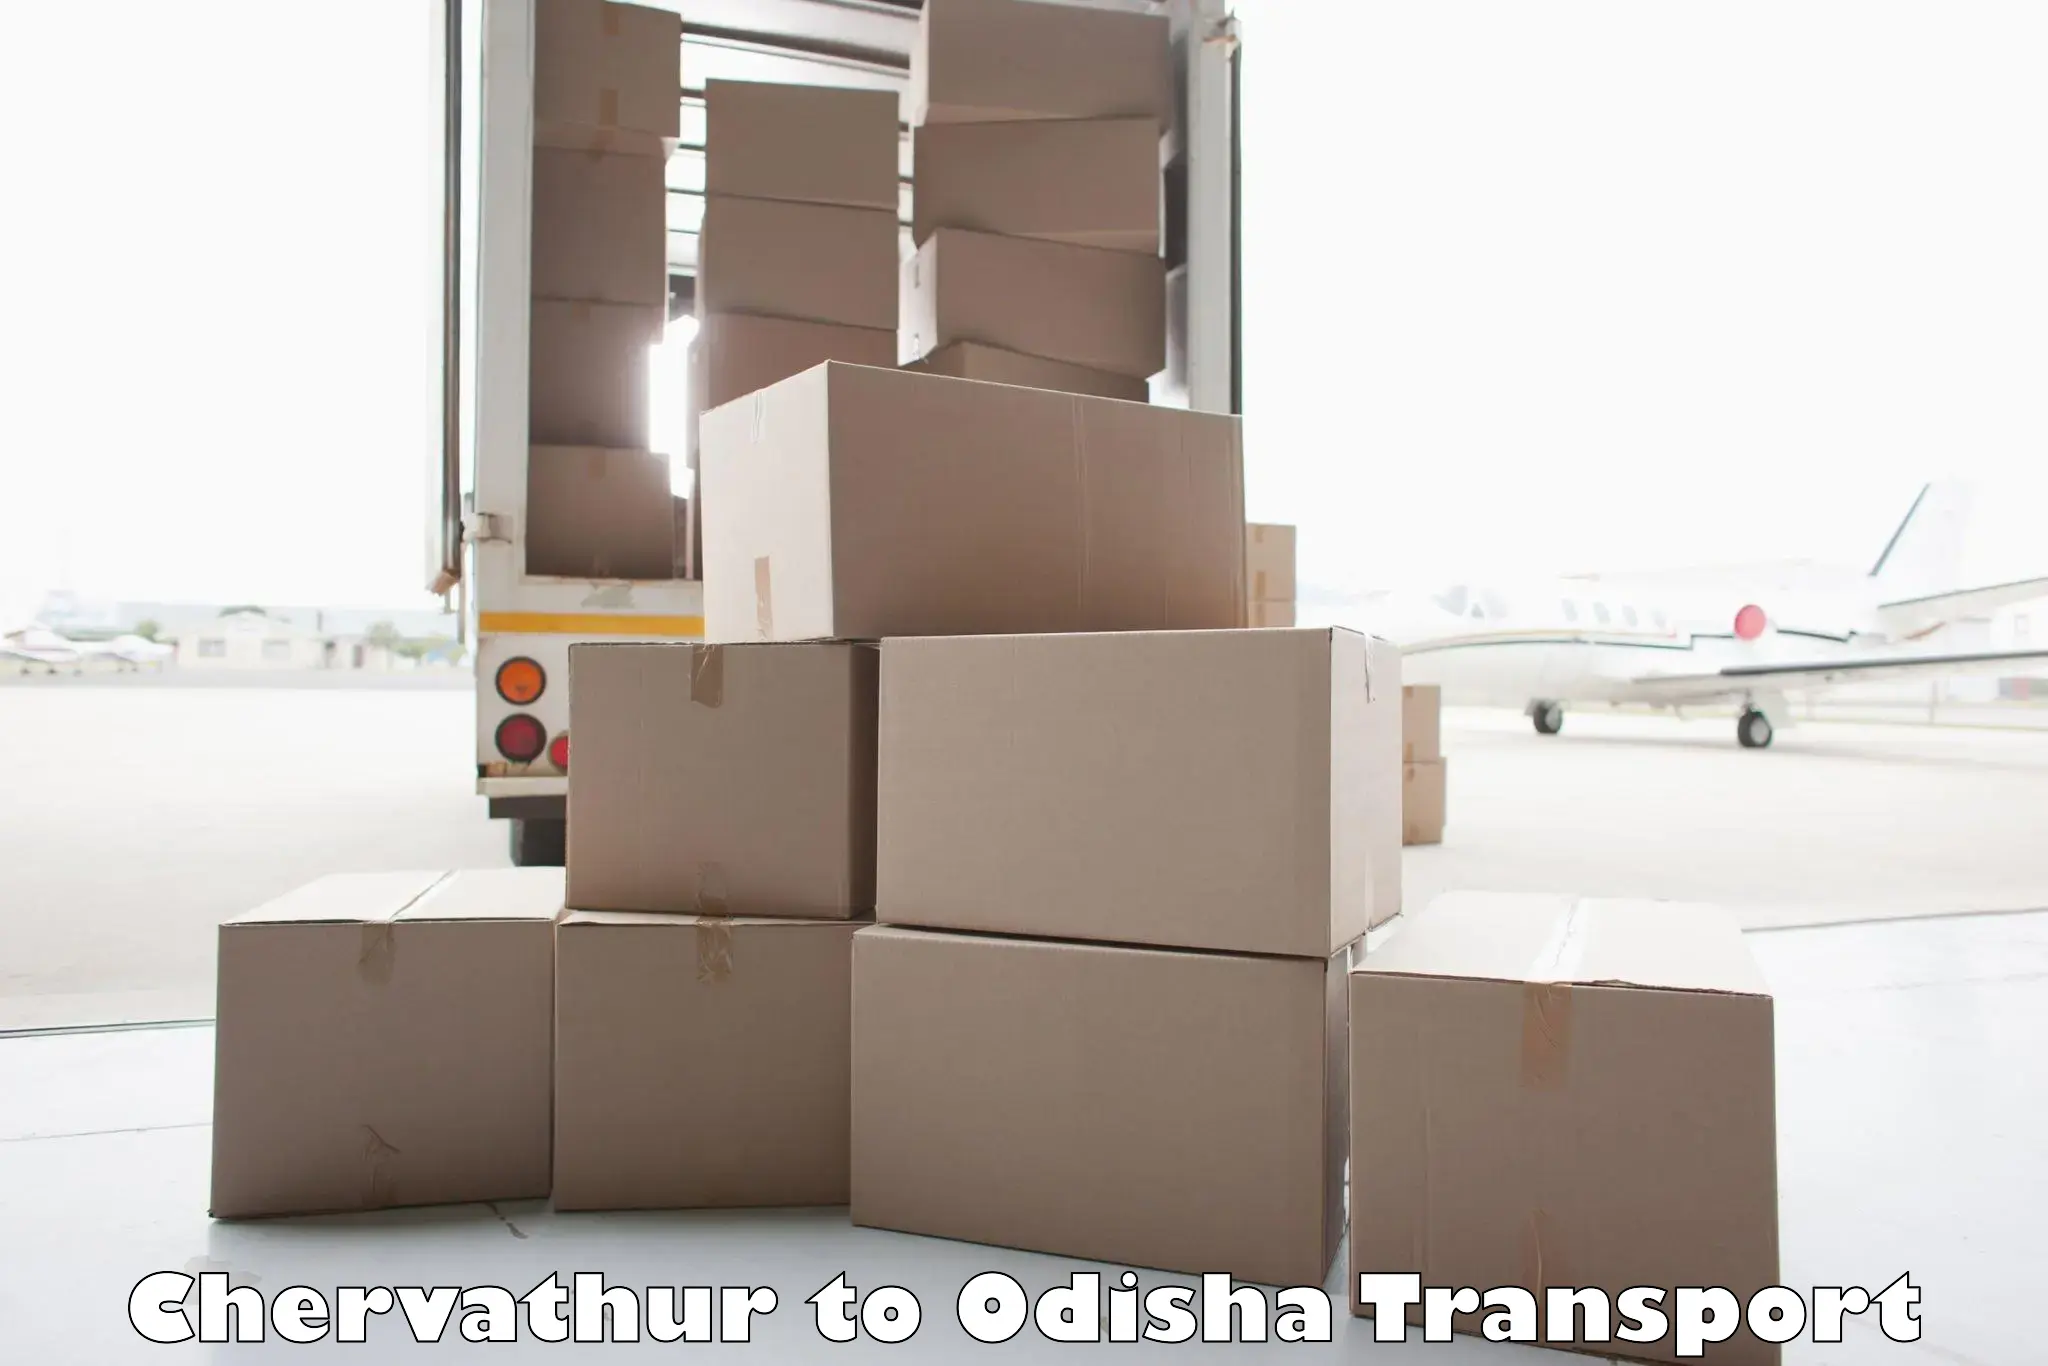 Two wheeler parcel service Chervathur to Bhubaneswar